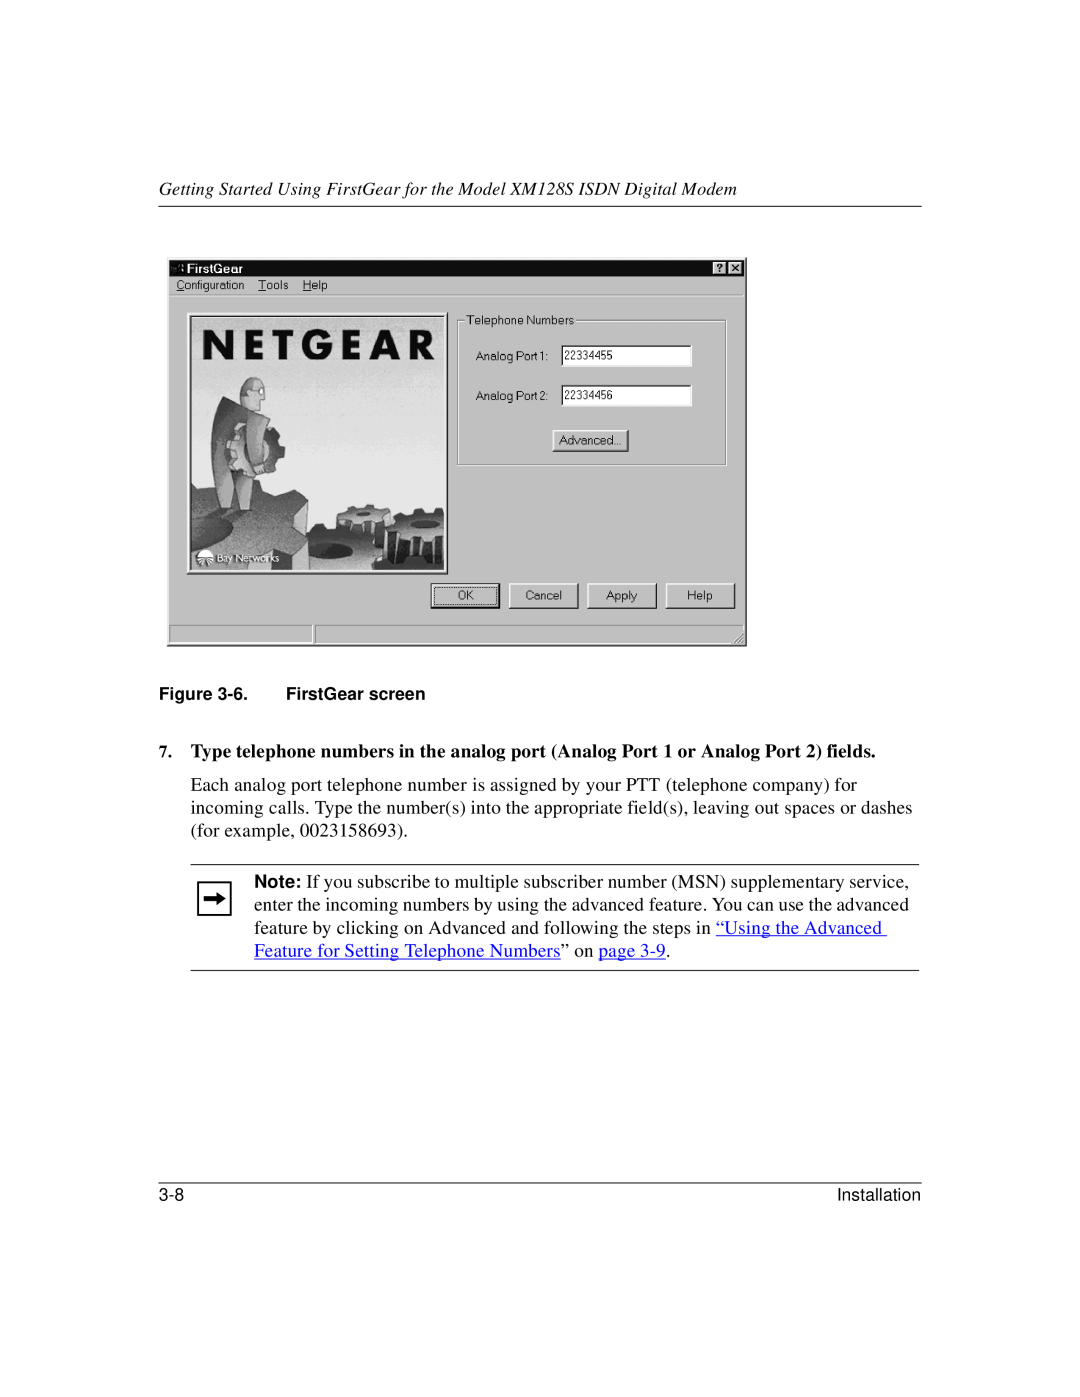 NETGEAR XM128S manual 6. FirstGear screen 